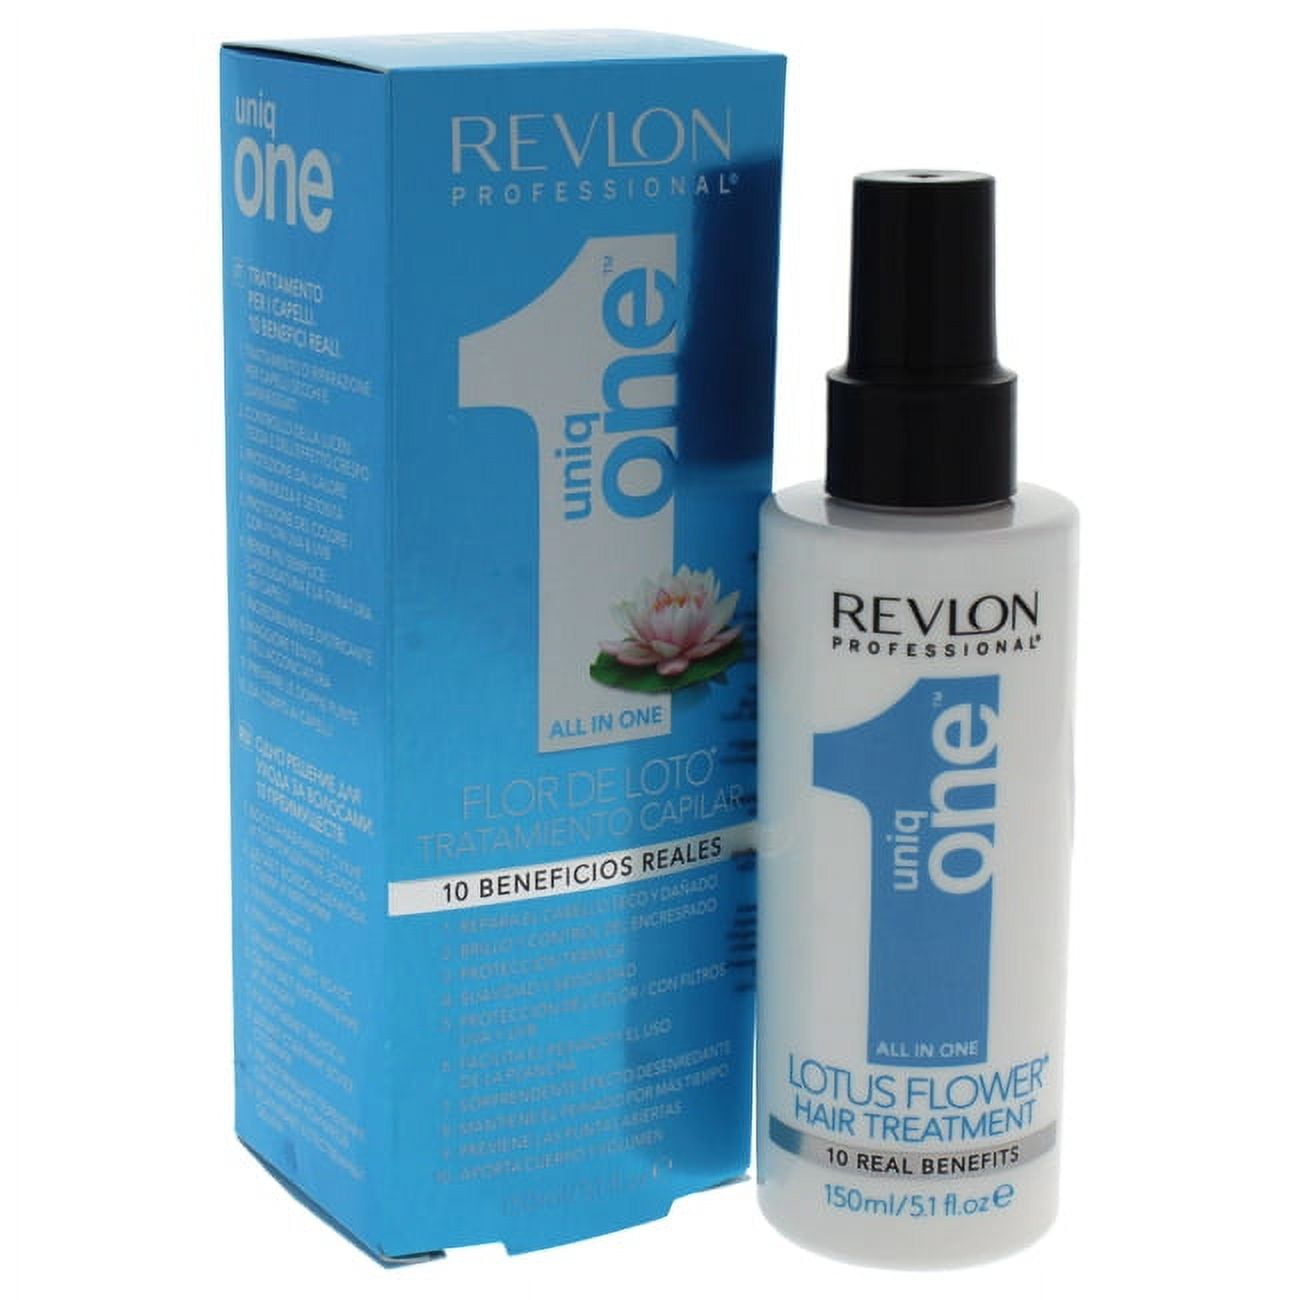 Revlon Uniq One - Treatment 5.1 Hair Treatment Flower oz Lotus